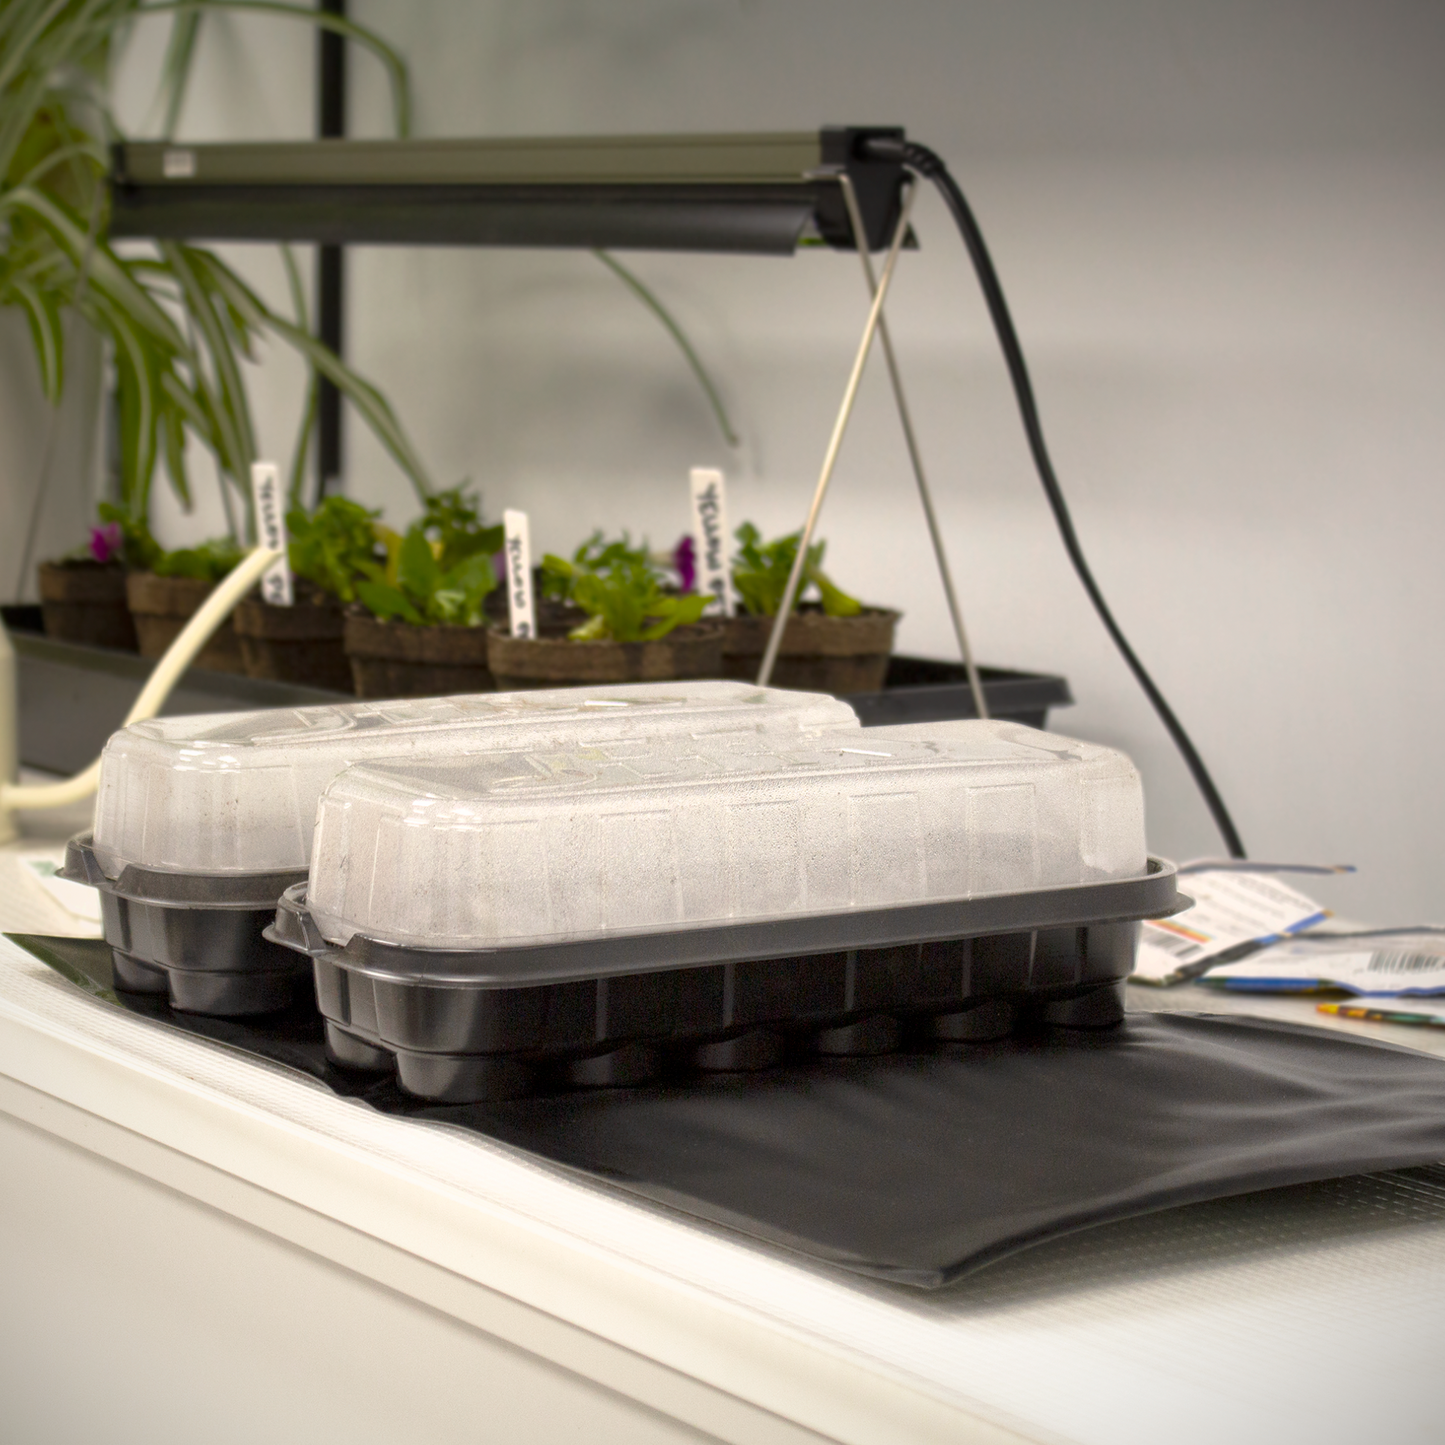 Ferry-Morse Seed Germination Heat Mat for Indoor Gardening